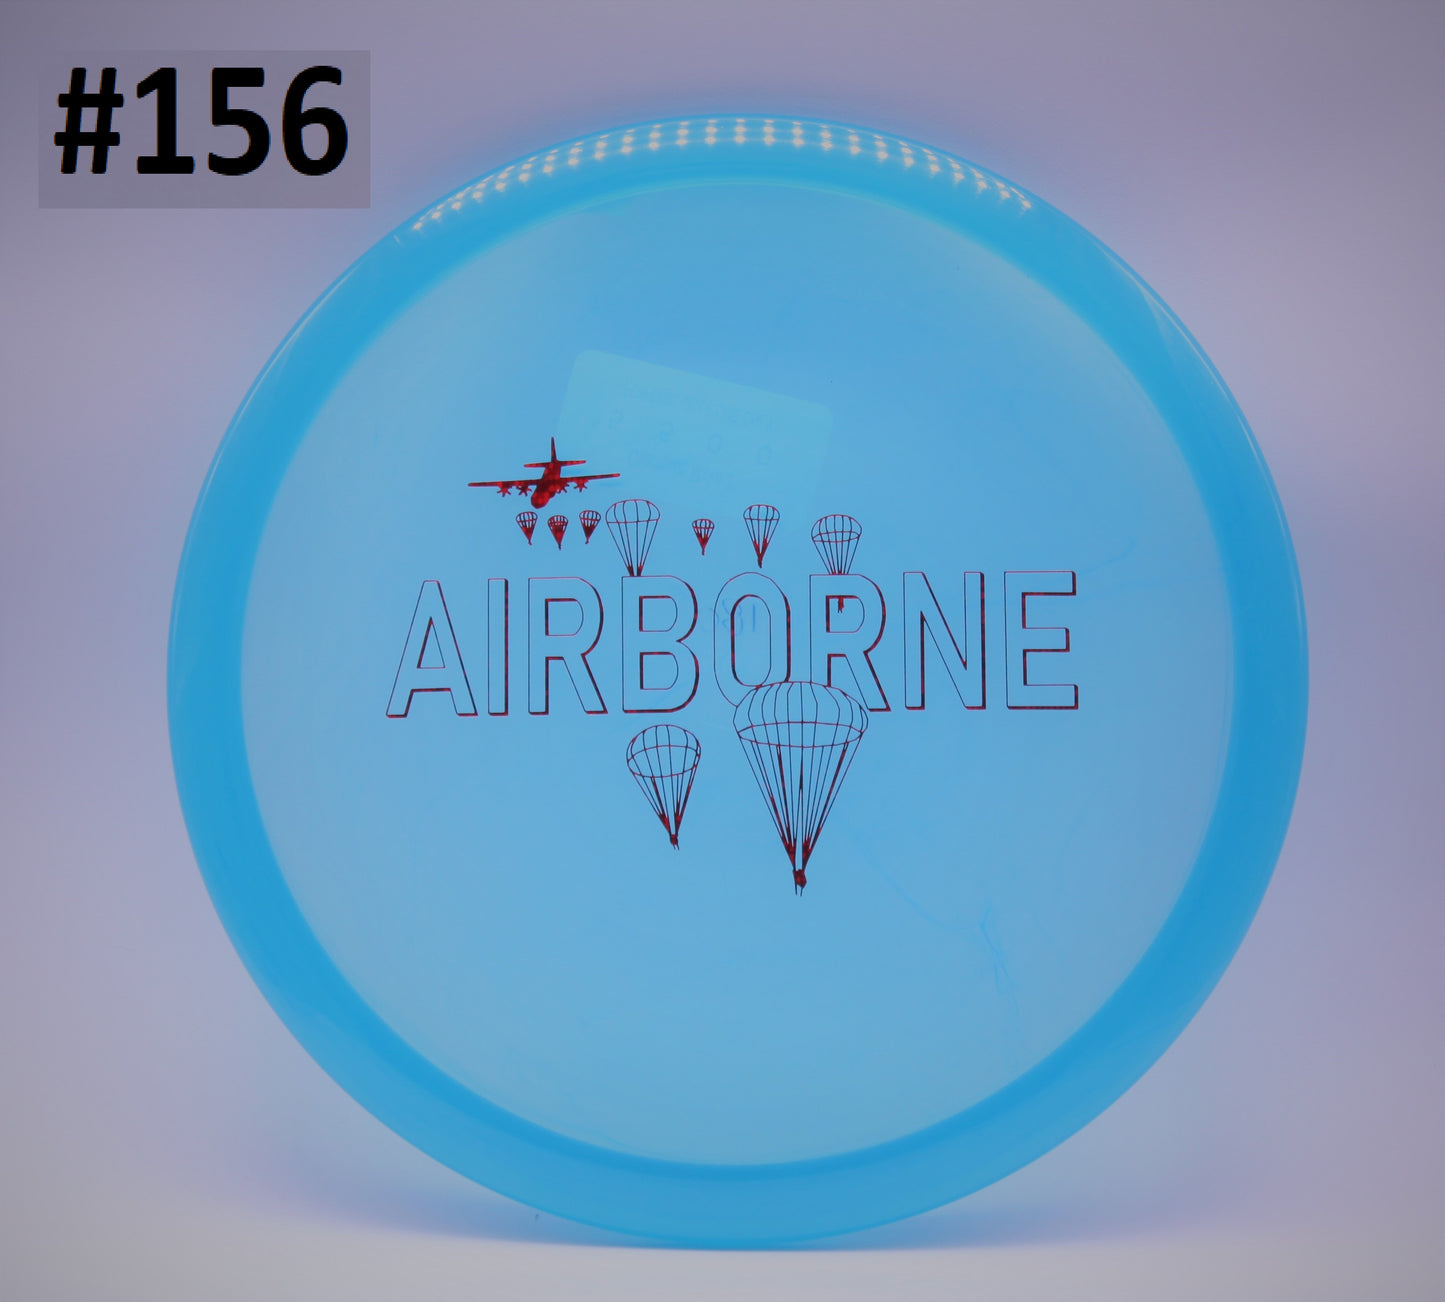 Champion Mako3 - Airborne